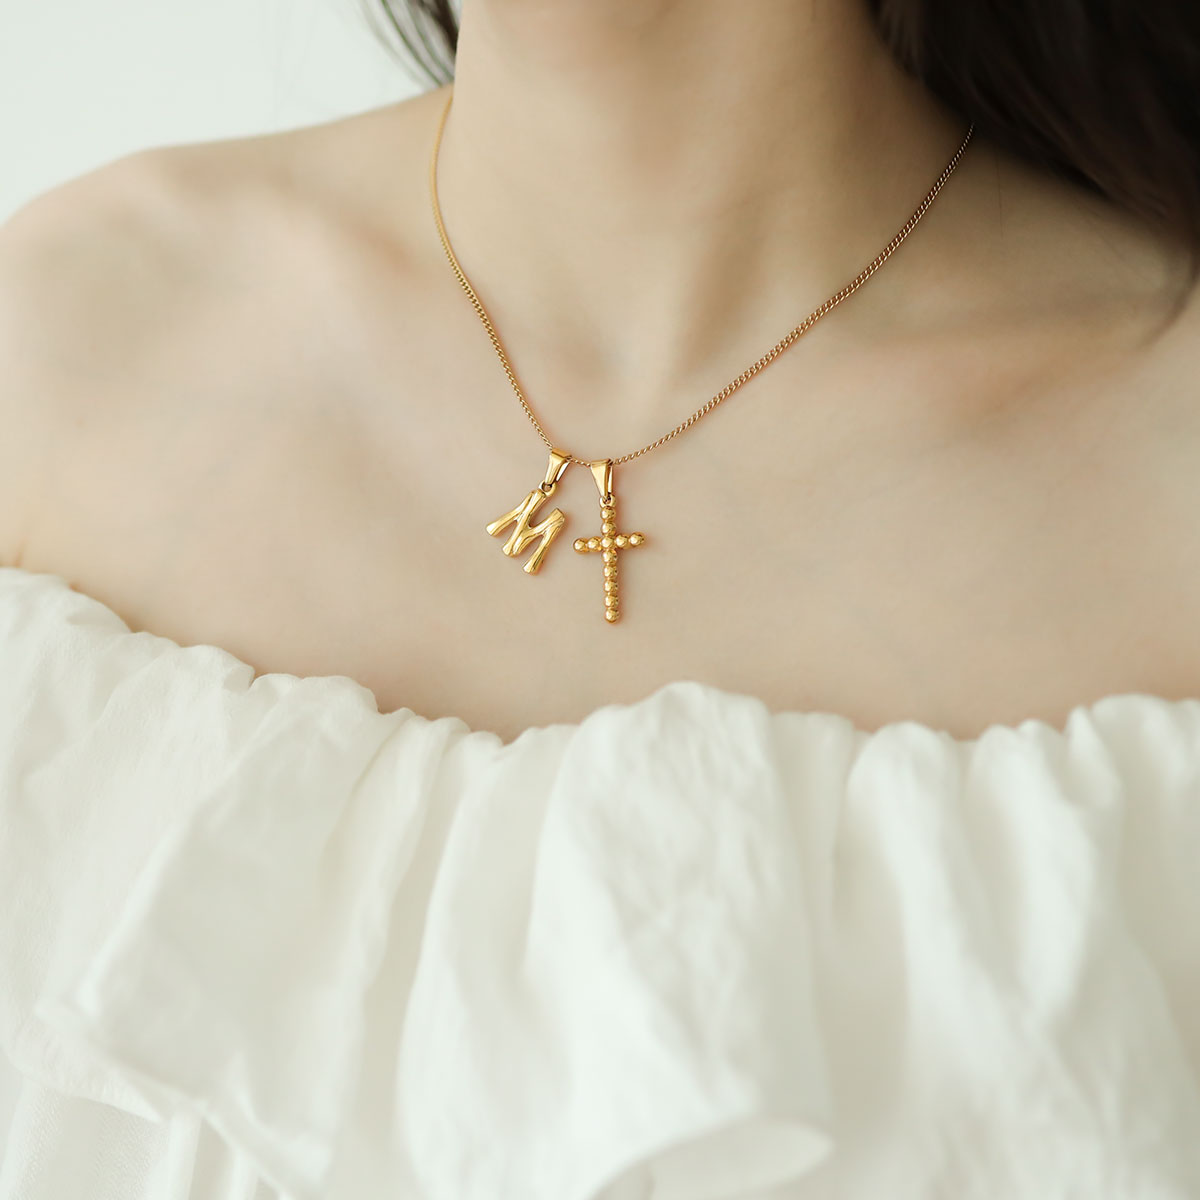 Women wear letter m necklace with cross.